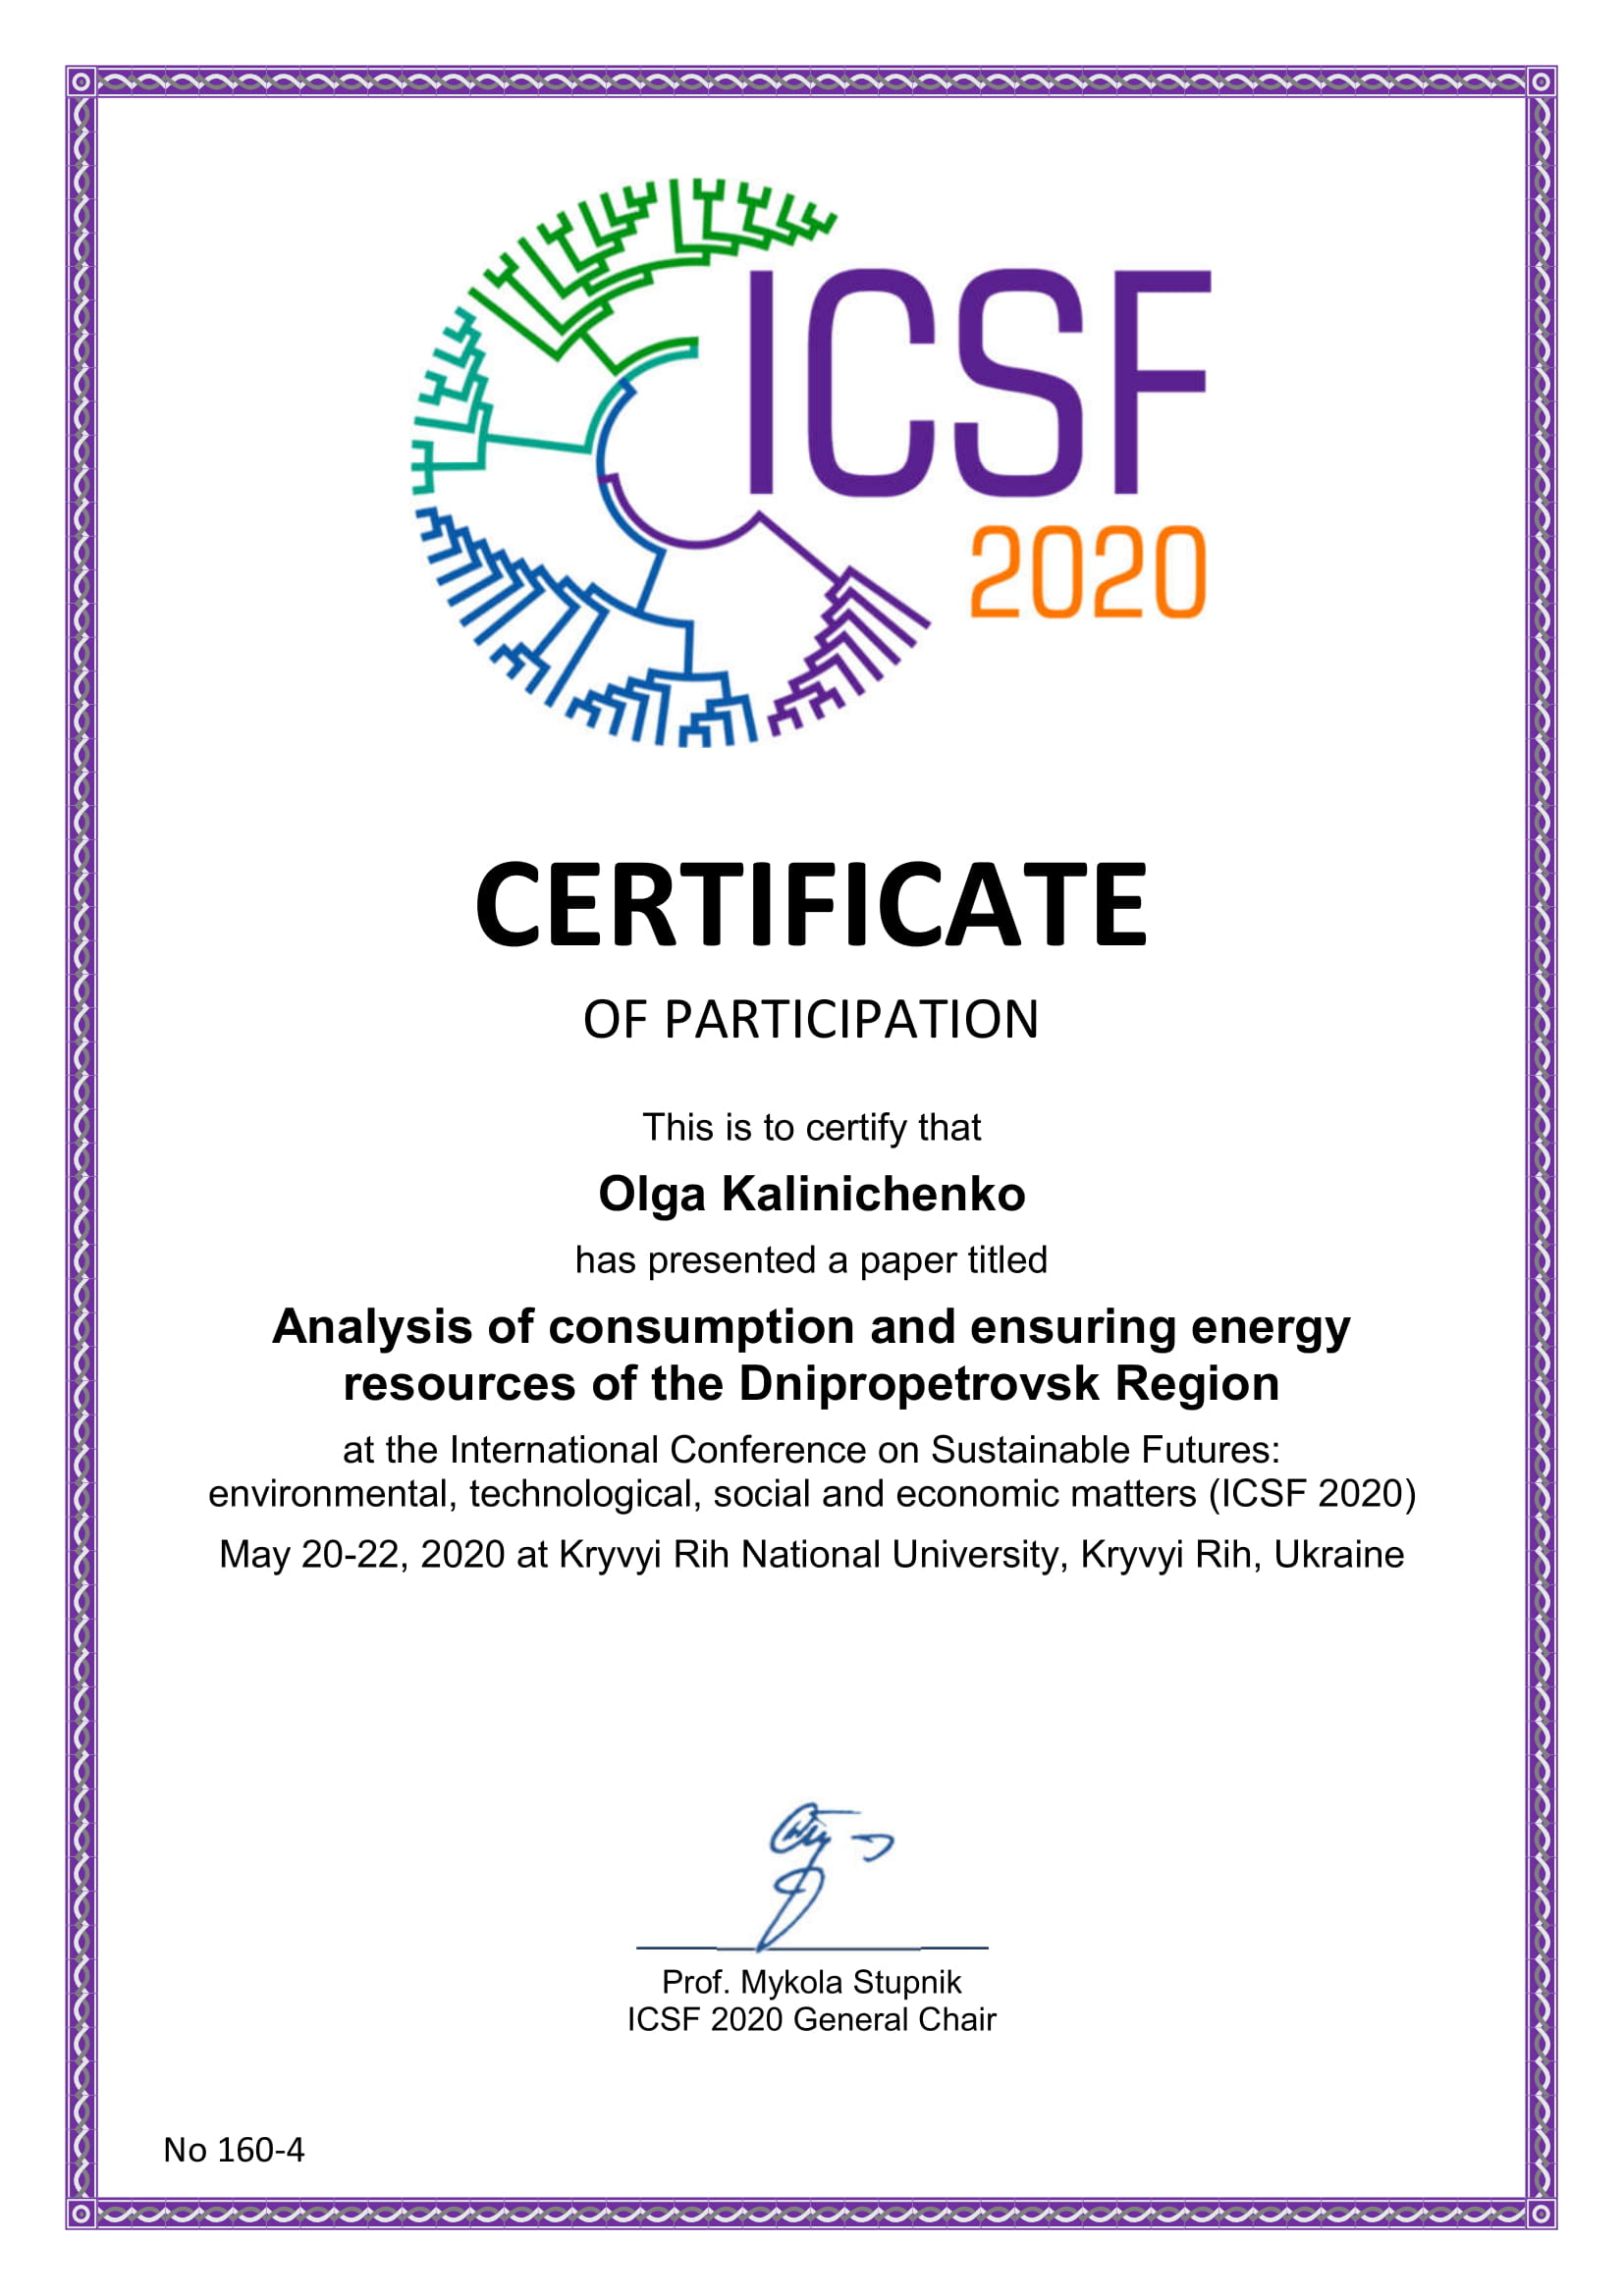 ICSF2020 certificate 377 1